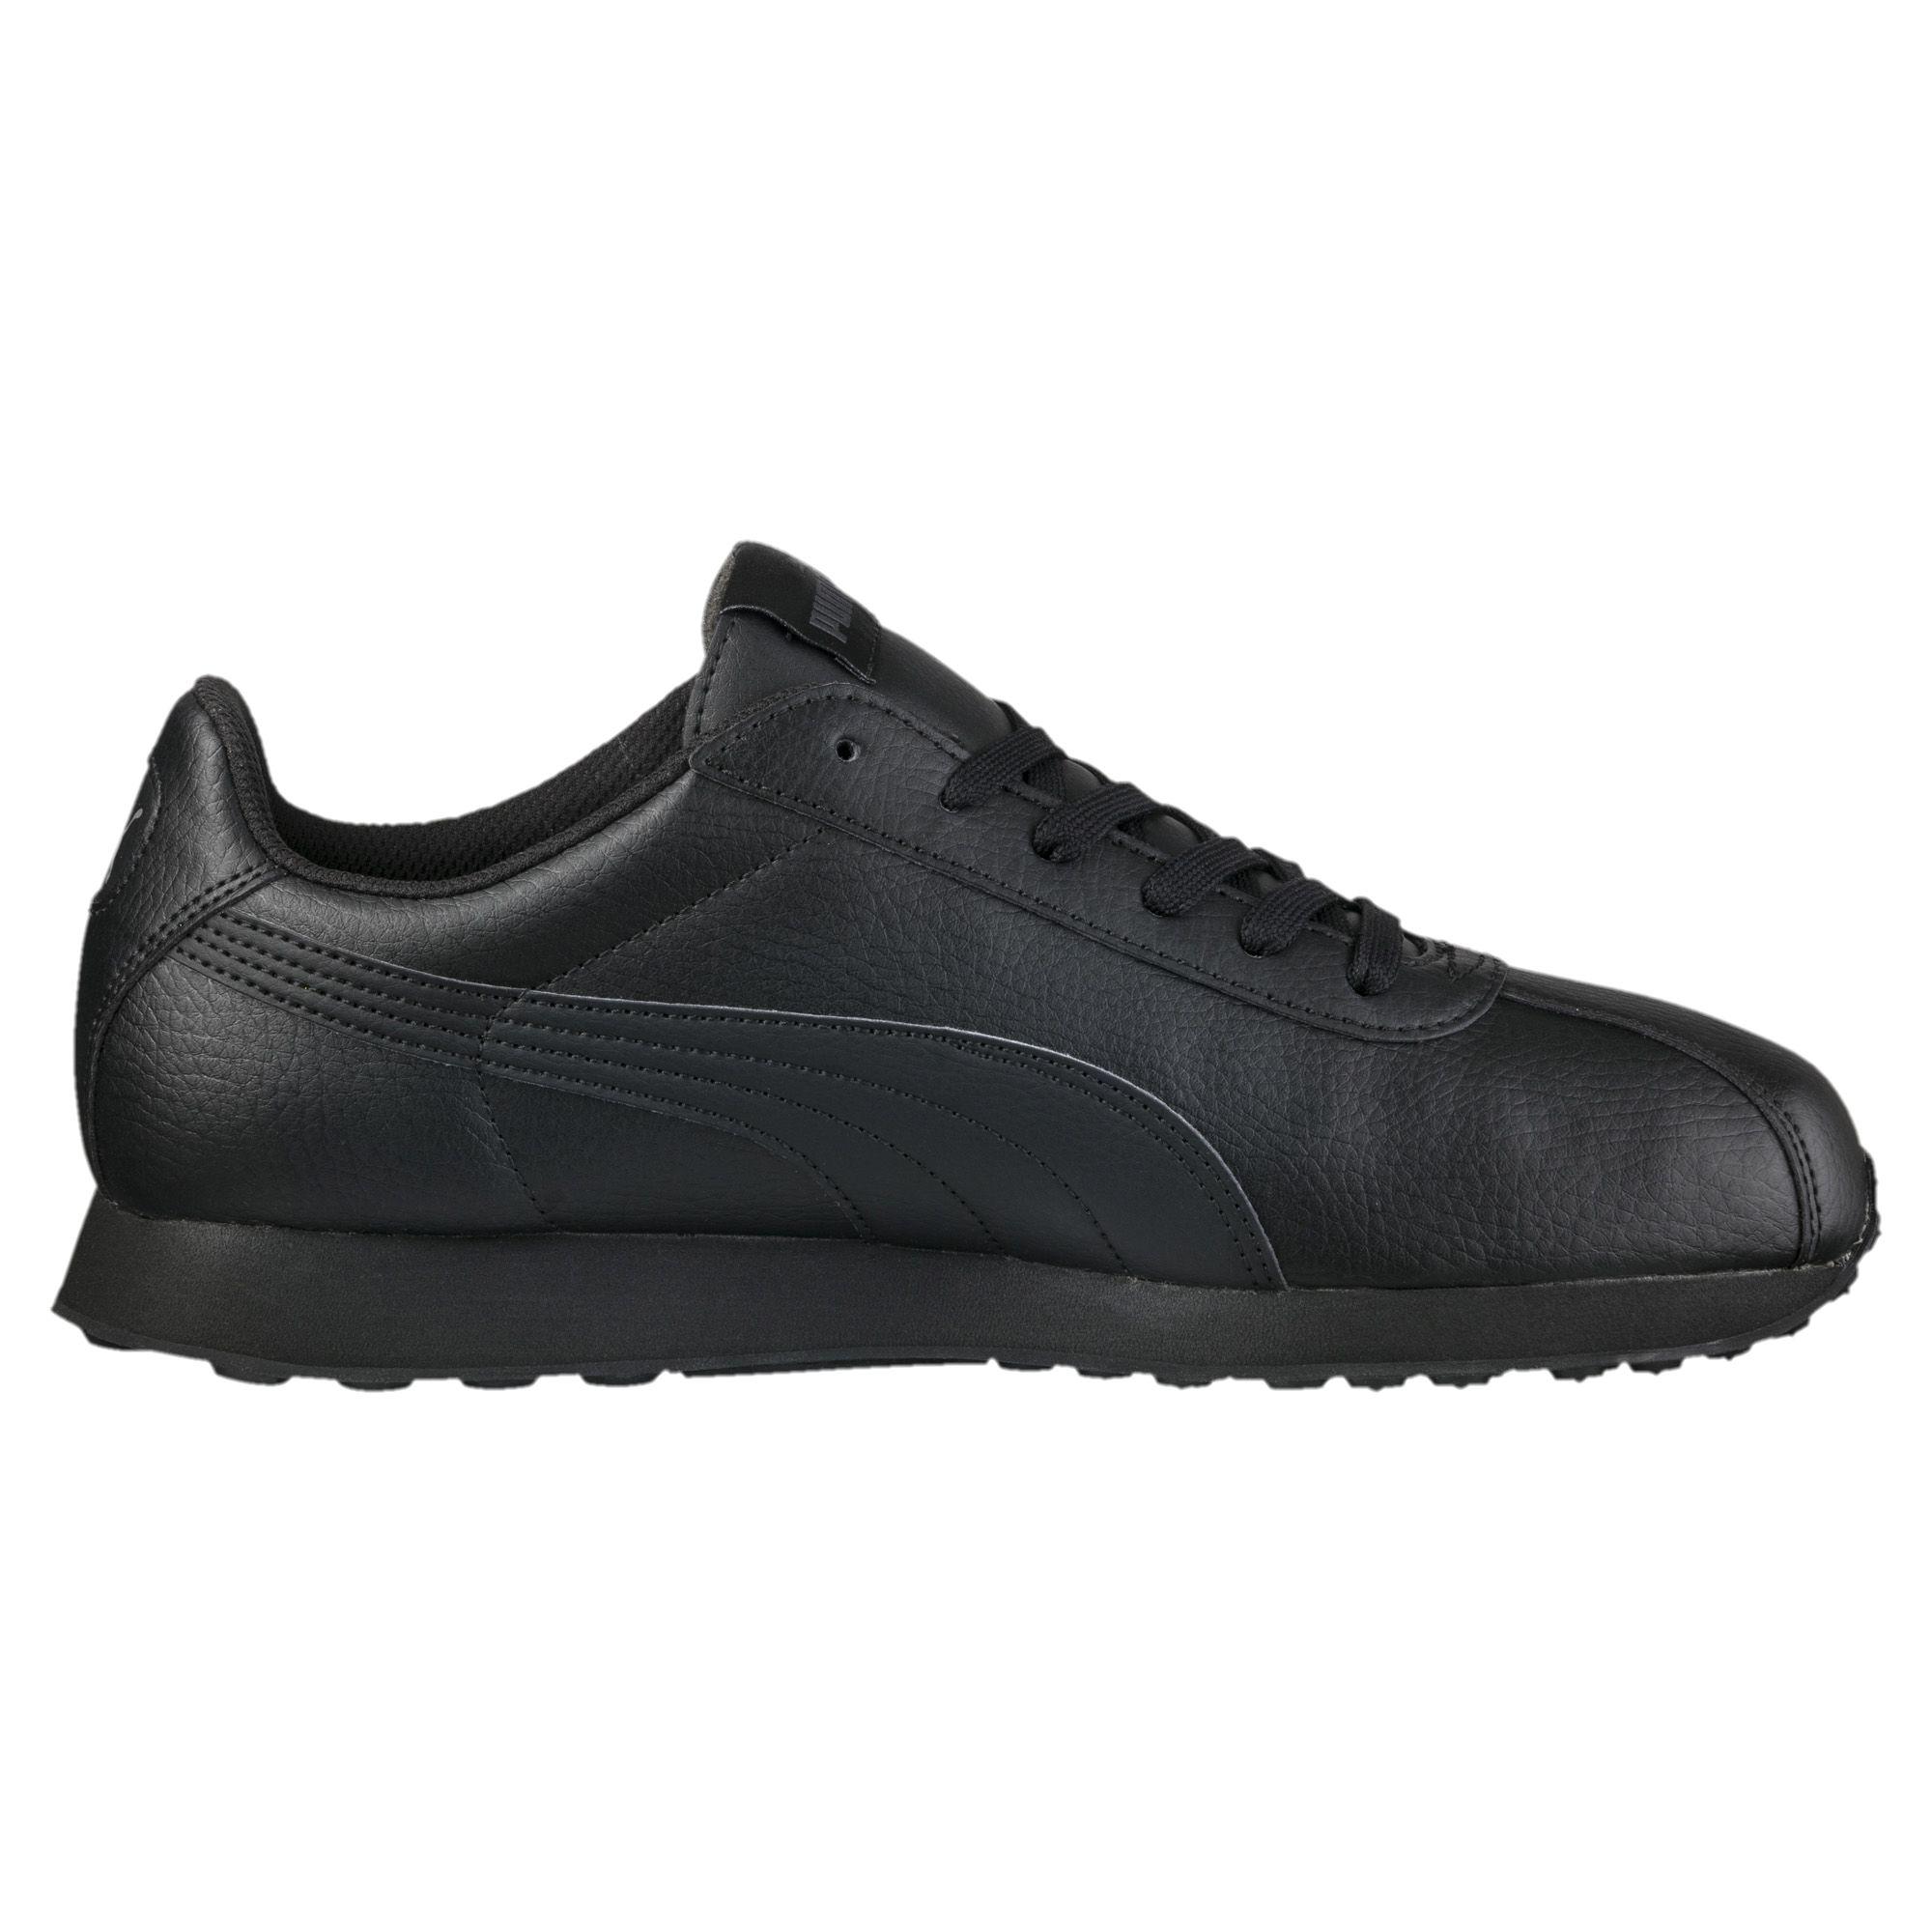 Lyst - Puma Turin Men's Sneakers in Black for Men